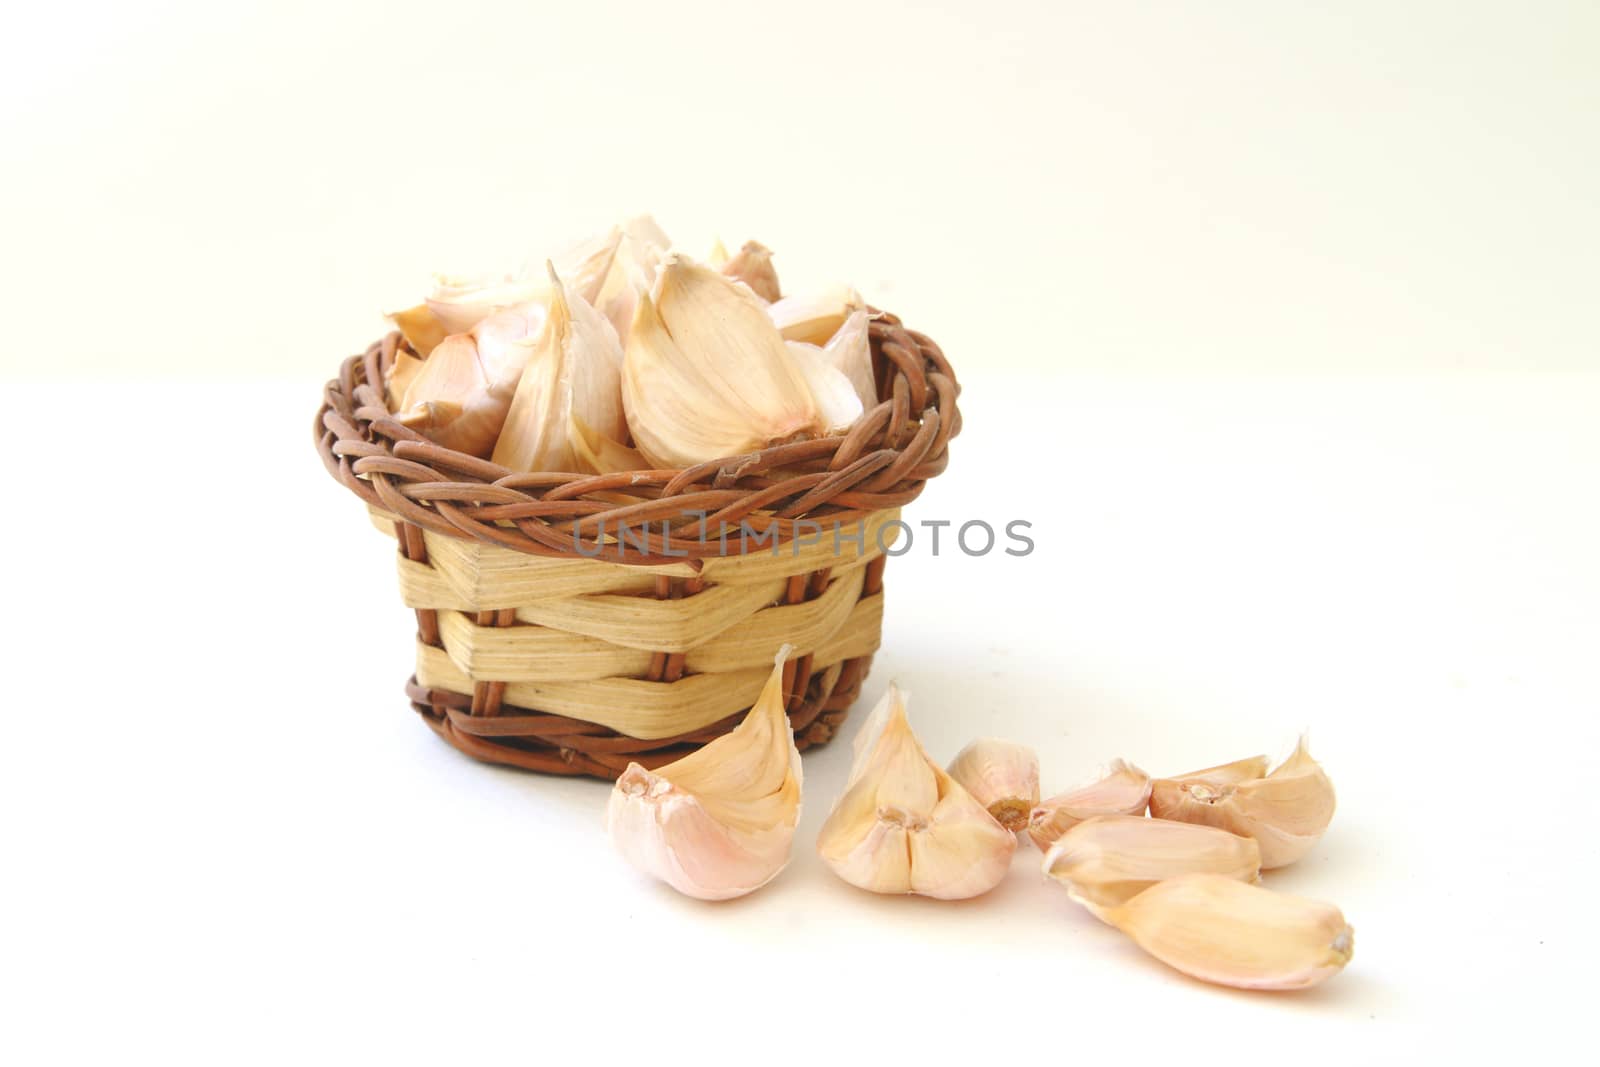 garlic pieces in small basket.